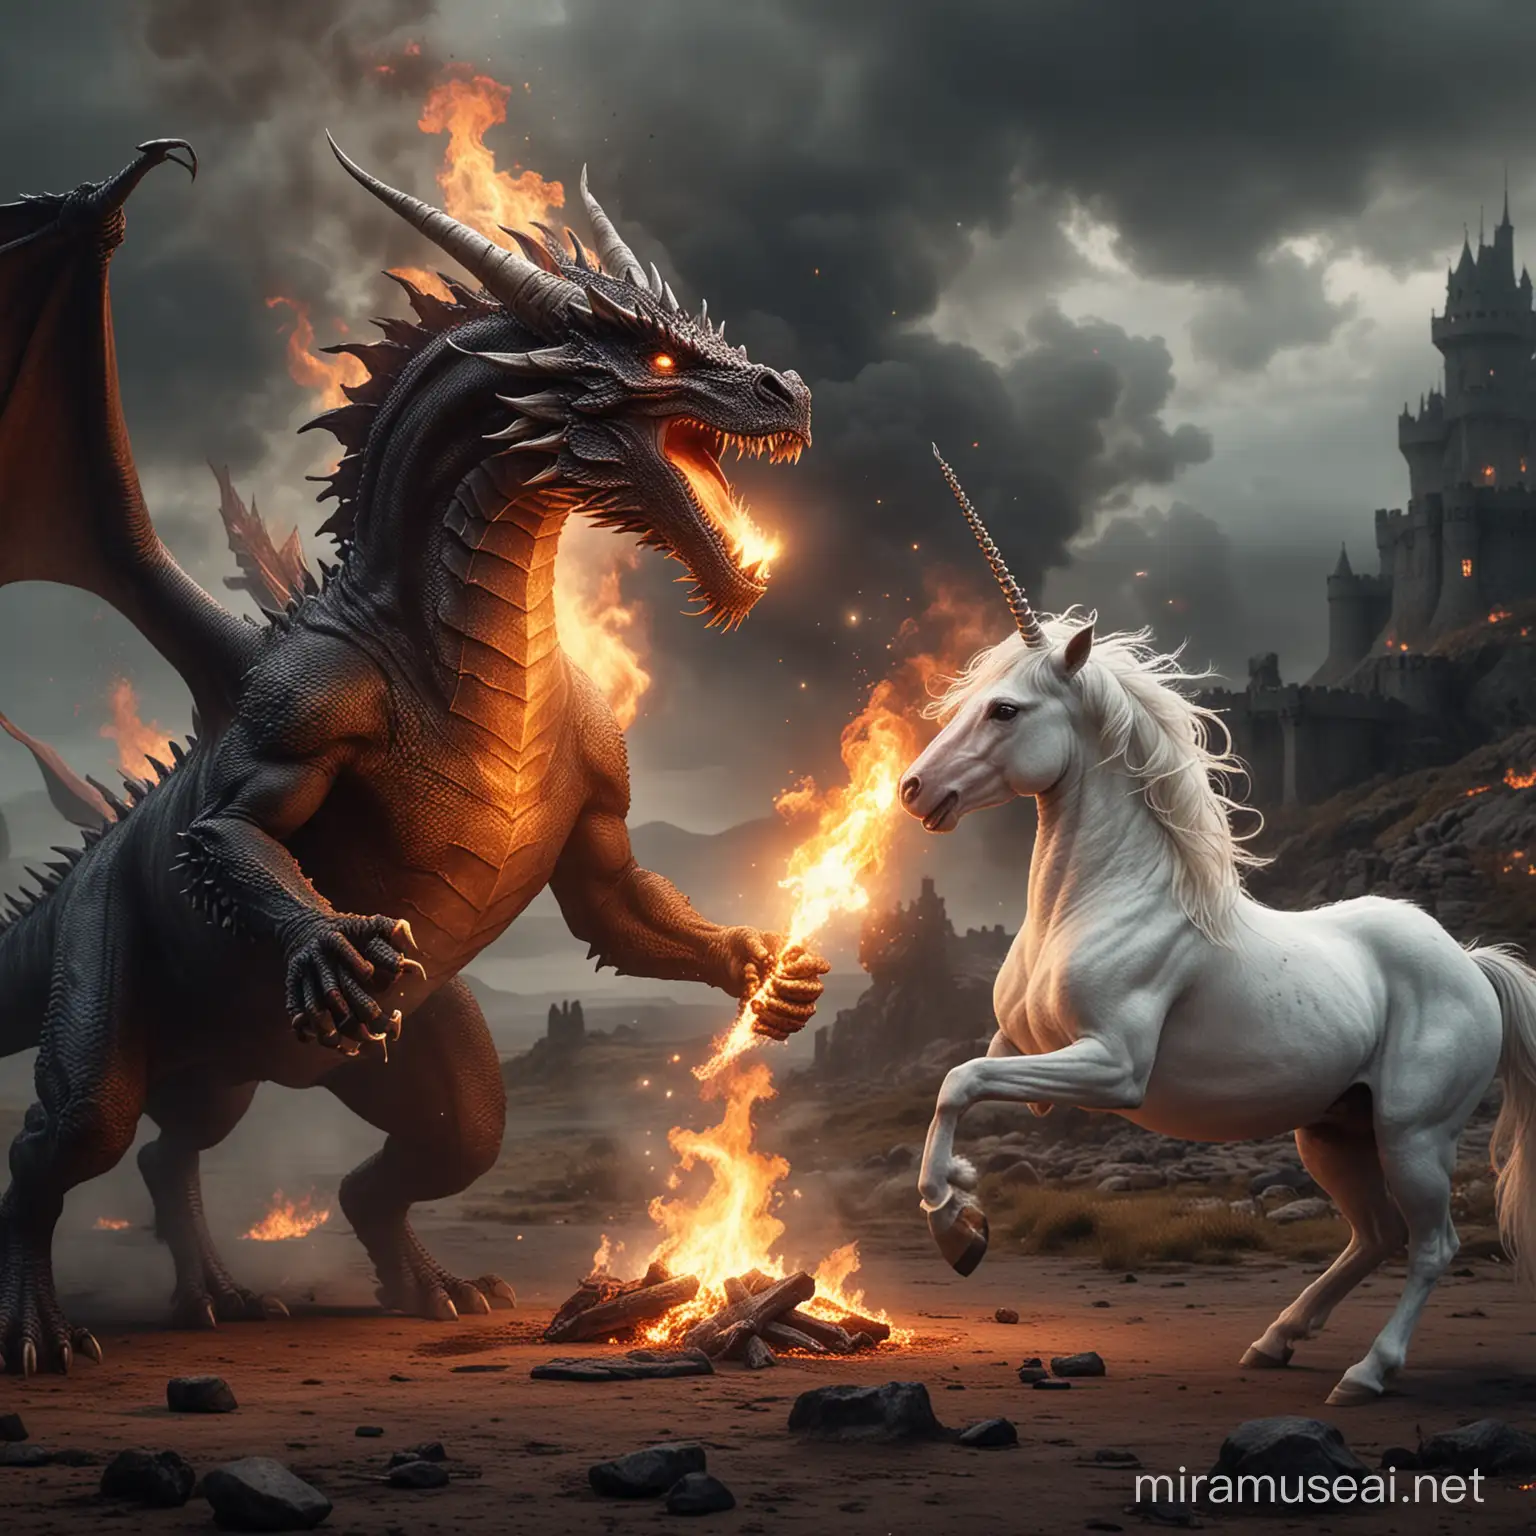 Epic Battle FireBreathing Evil Dragon vs Courageous Unicorn in Game of ThronesInspired Landscape